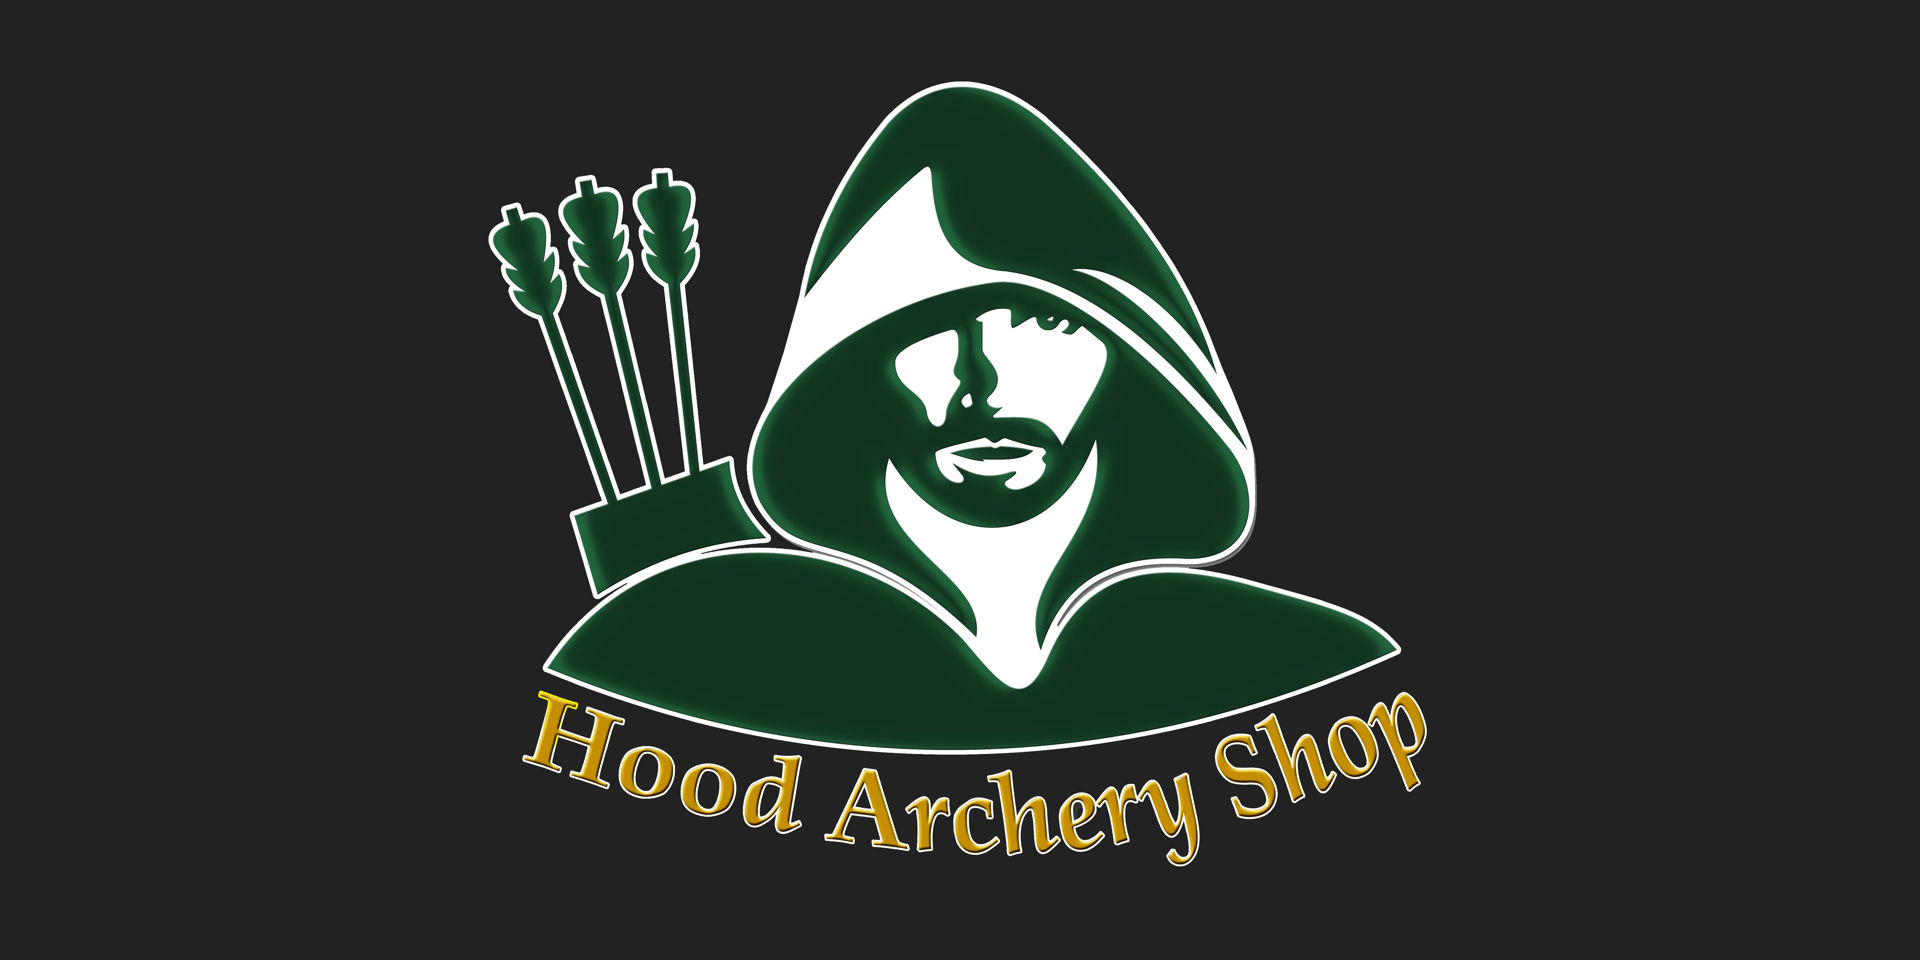 Hood Archery Shop